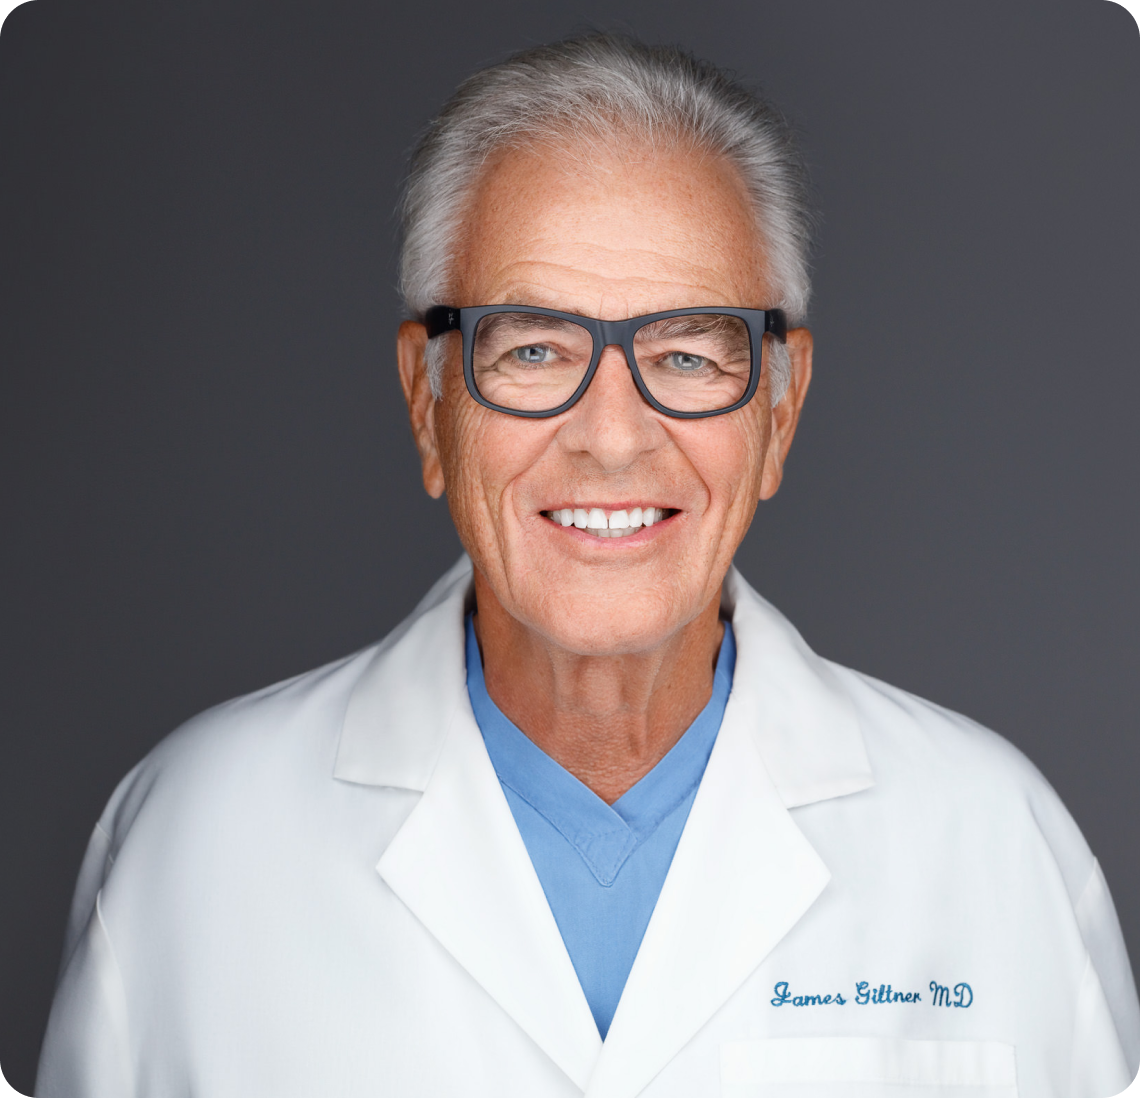 Dr. Jim Giltner, MD smiling against a gray background